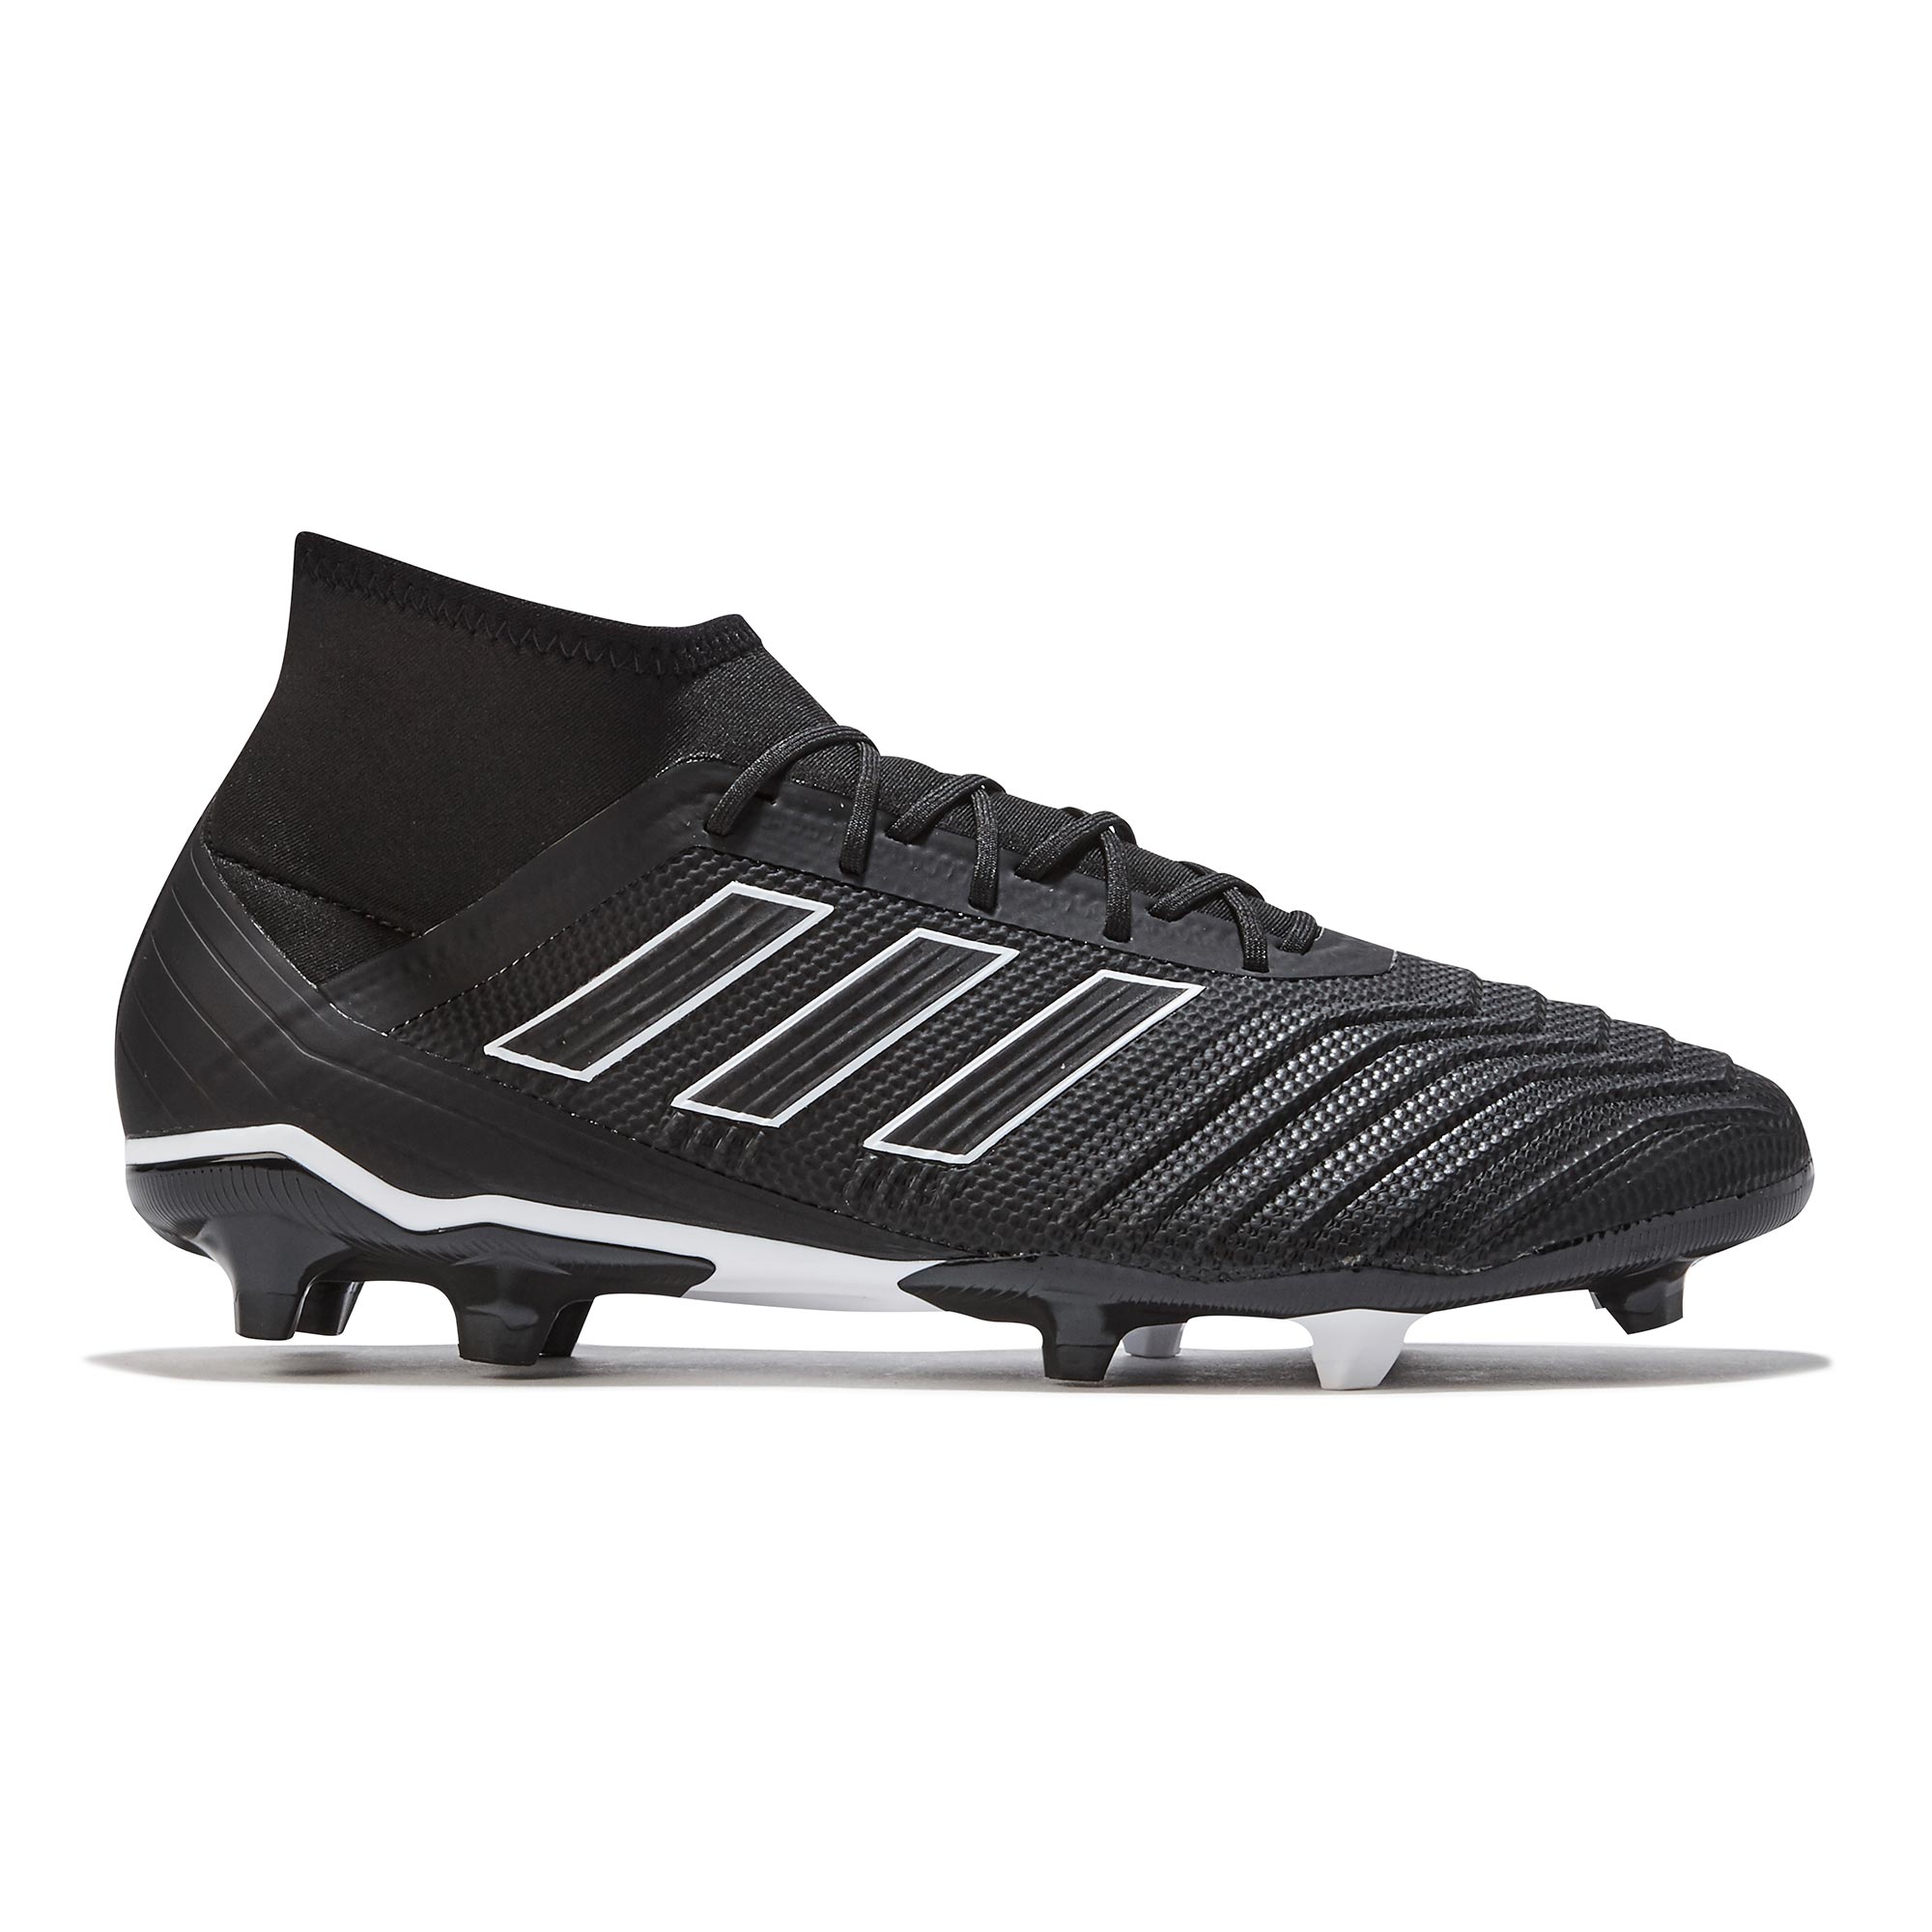 Adidas adidas Predator 18.2 Firm Ground Football Boots - Black